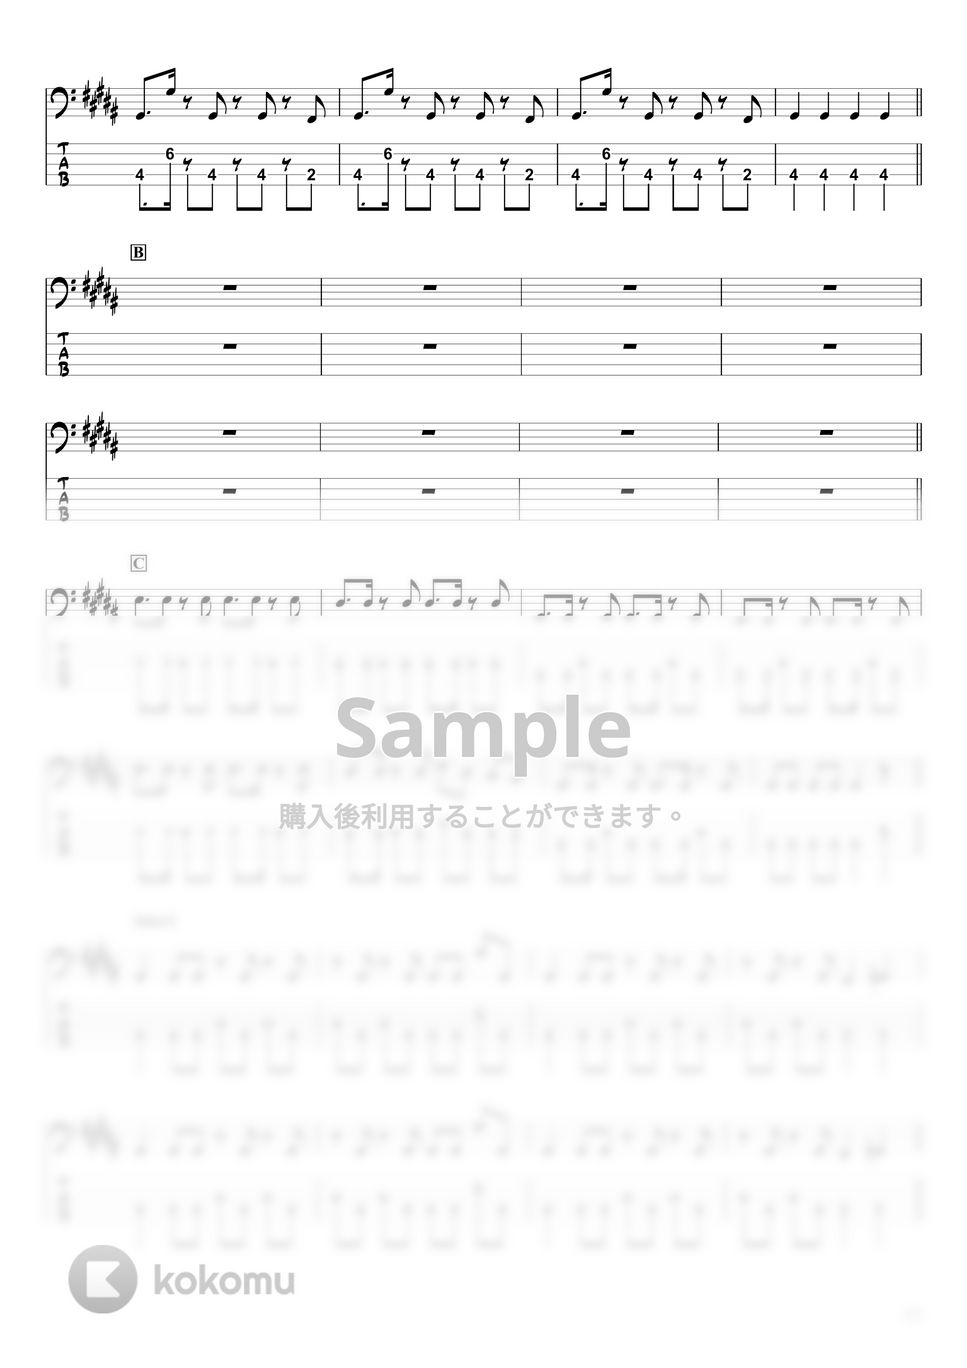 Kanaria - デーモンロード (ベースTAB譜☆5弦ベース対応) by swbass